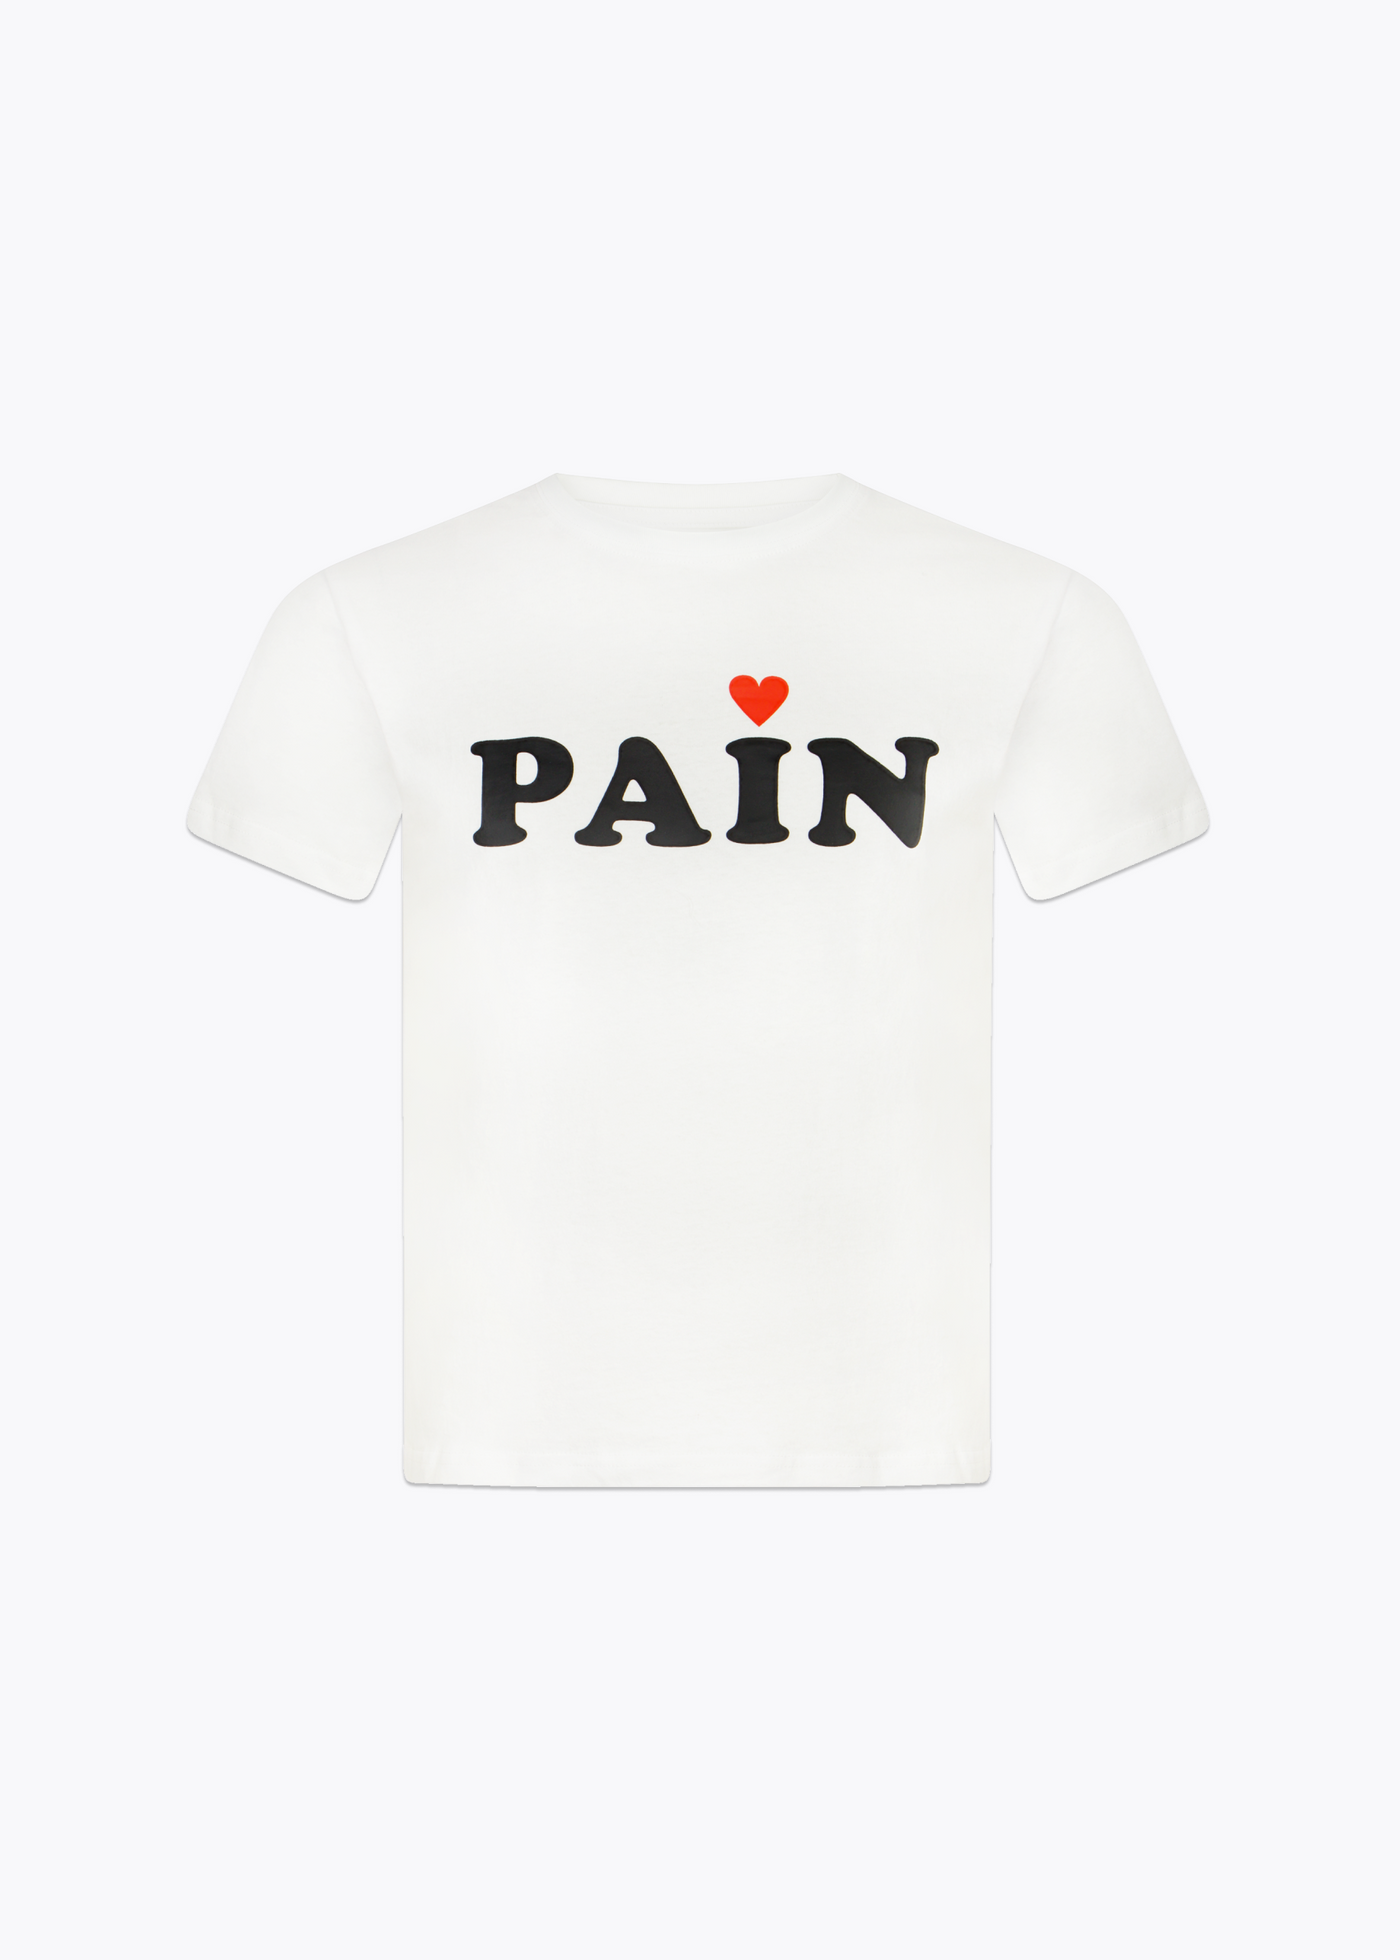 White vintage Pain Shirt